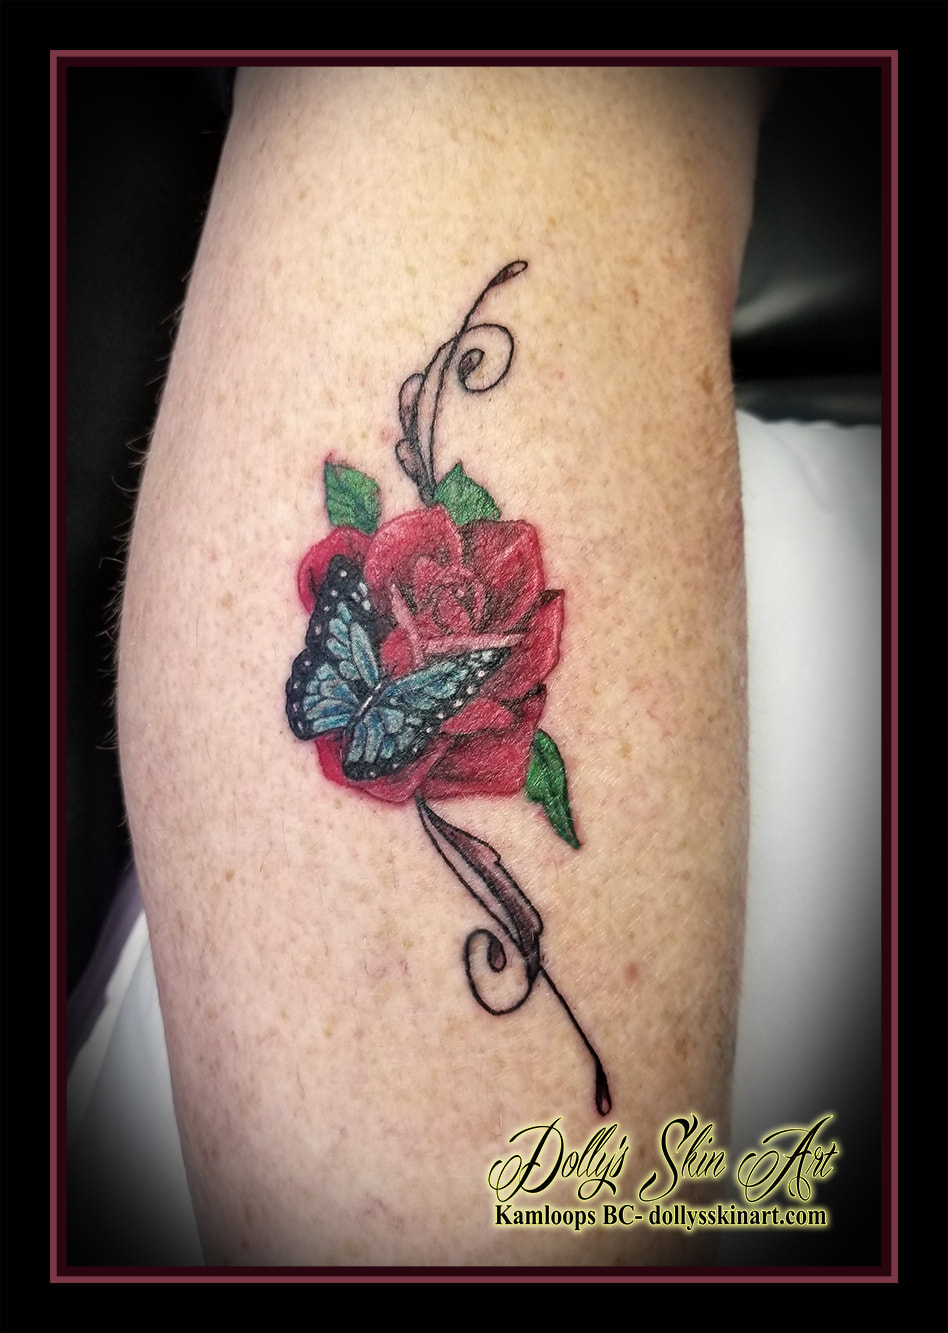 butterfly rose tattoo colour flower filigree blue white red green black leg calf tattoo kamloops dolly's skin art